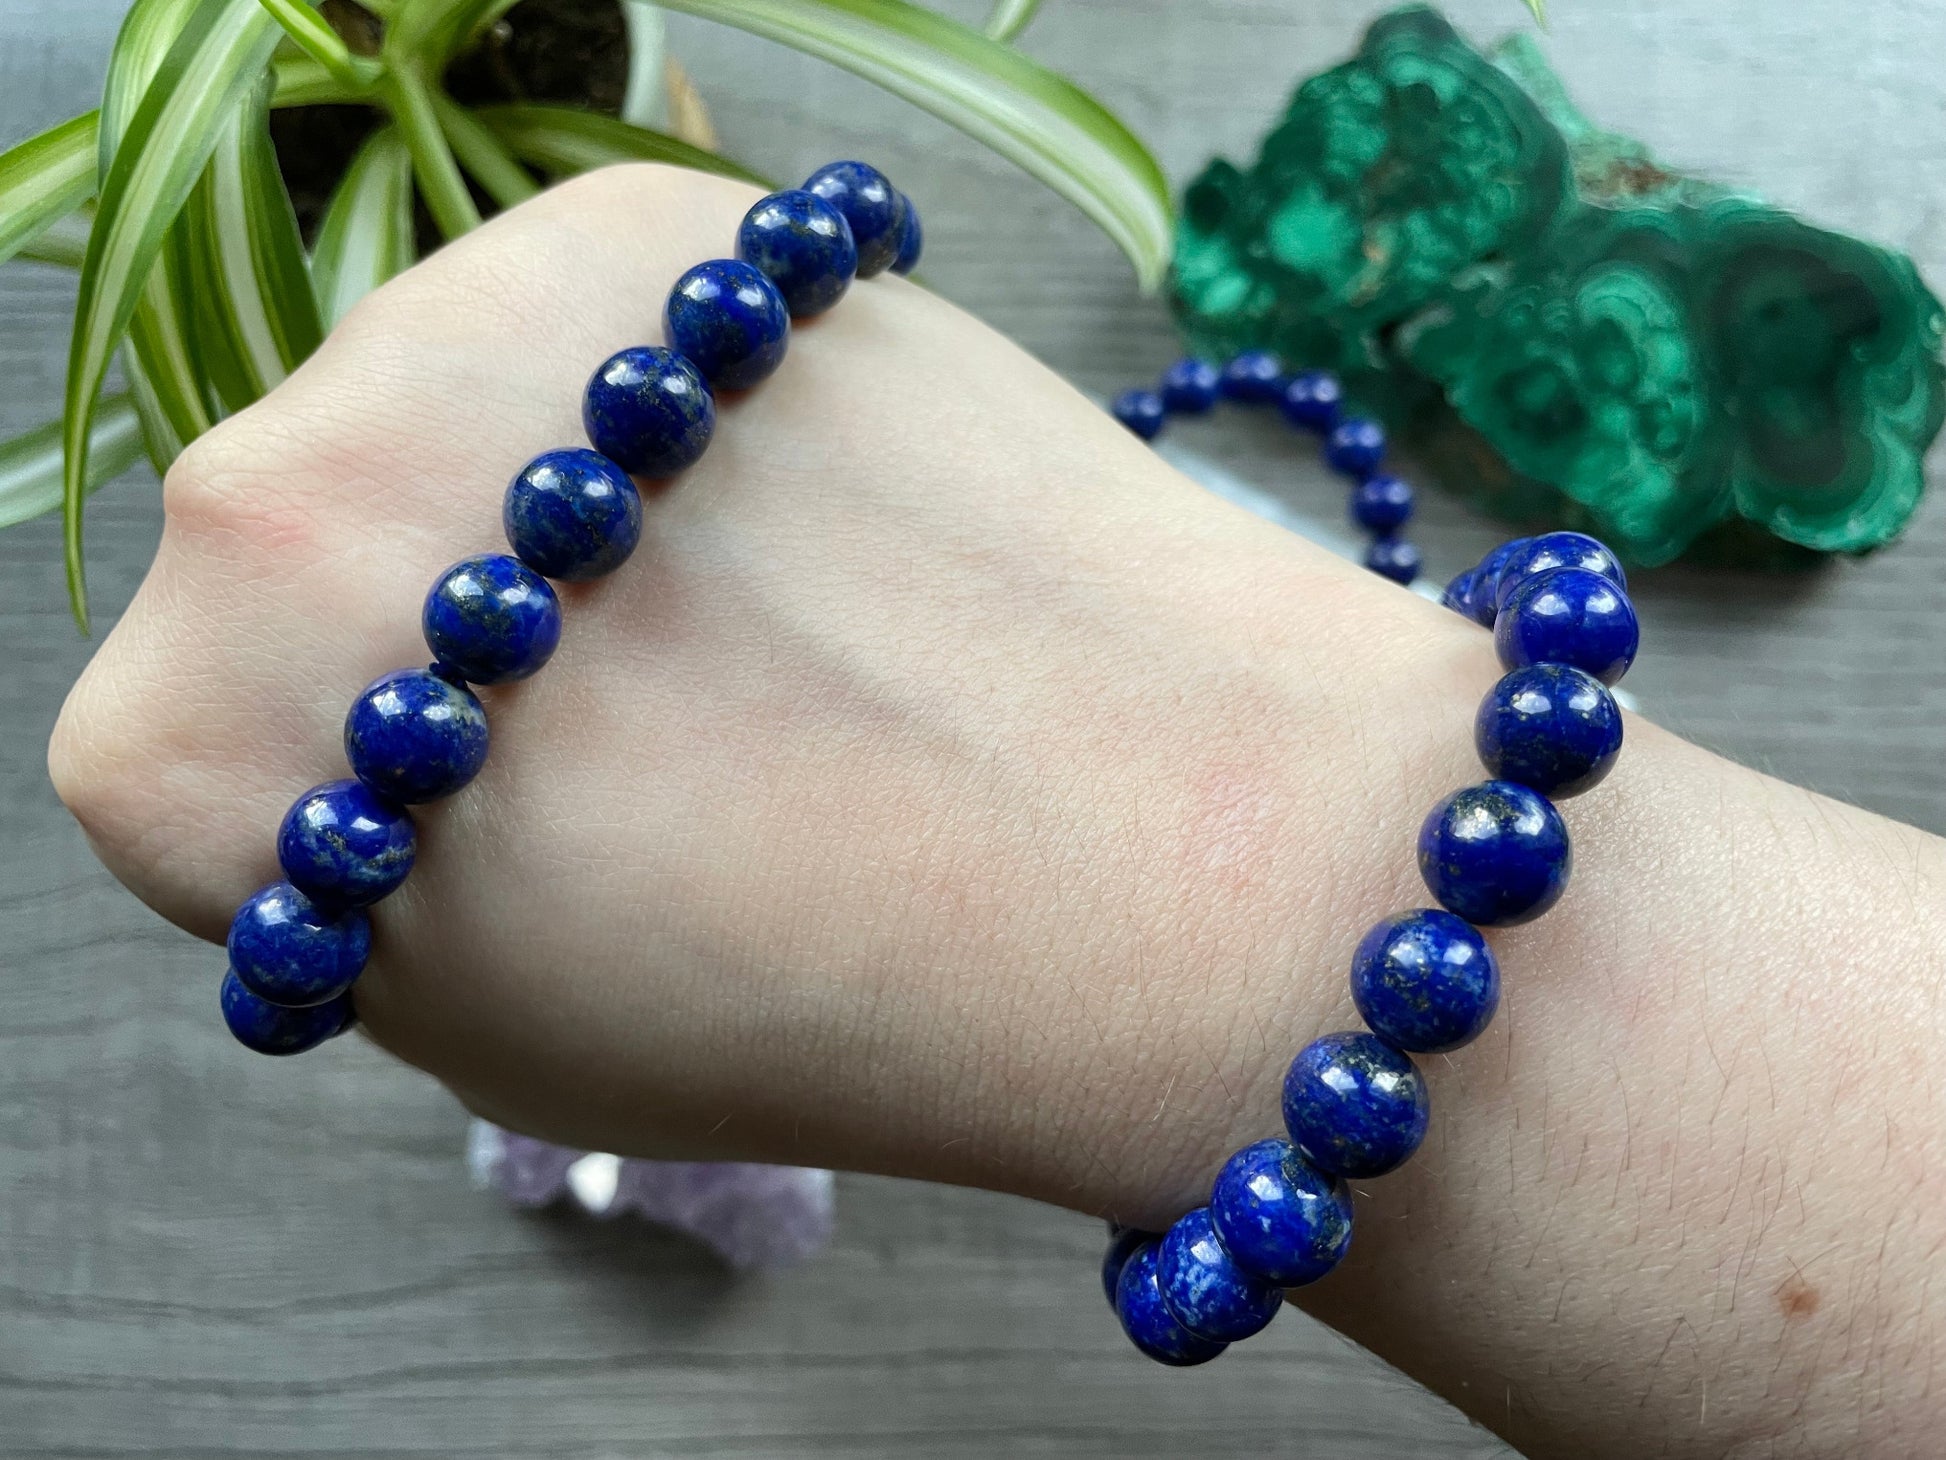 Pictured is a lapis lazuli bead bracelet.